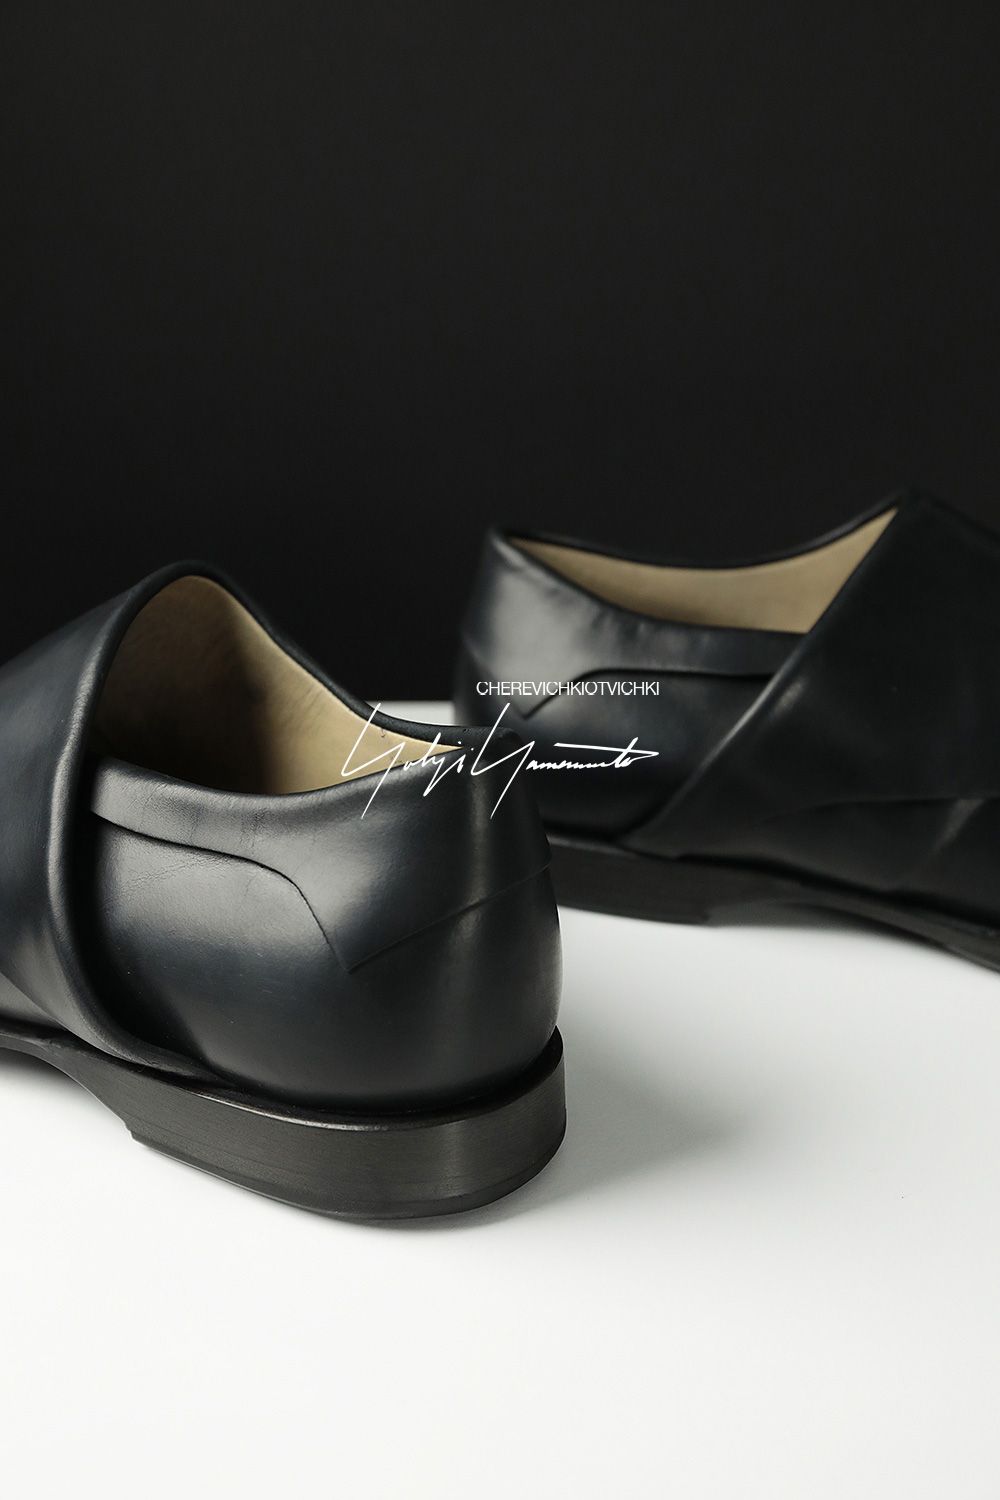 Cherevichkiotvichki × Yohji Yamamoto 短靴 | www.jarussi.com.br